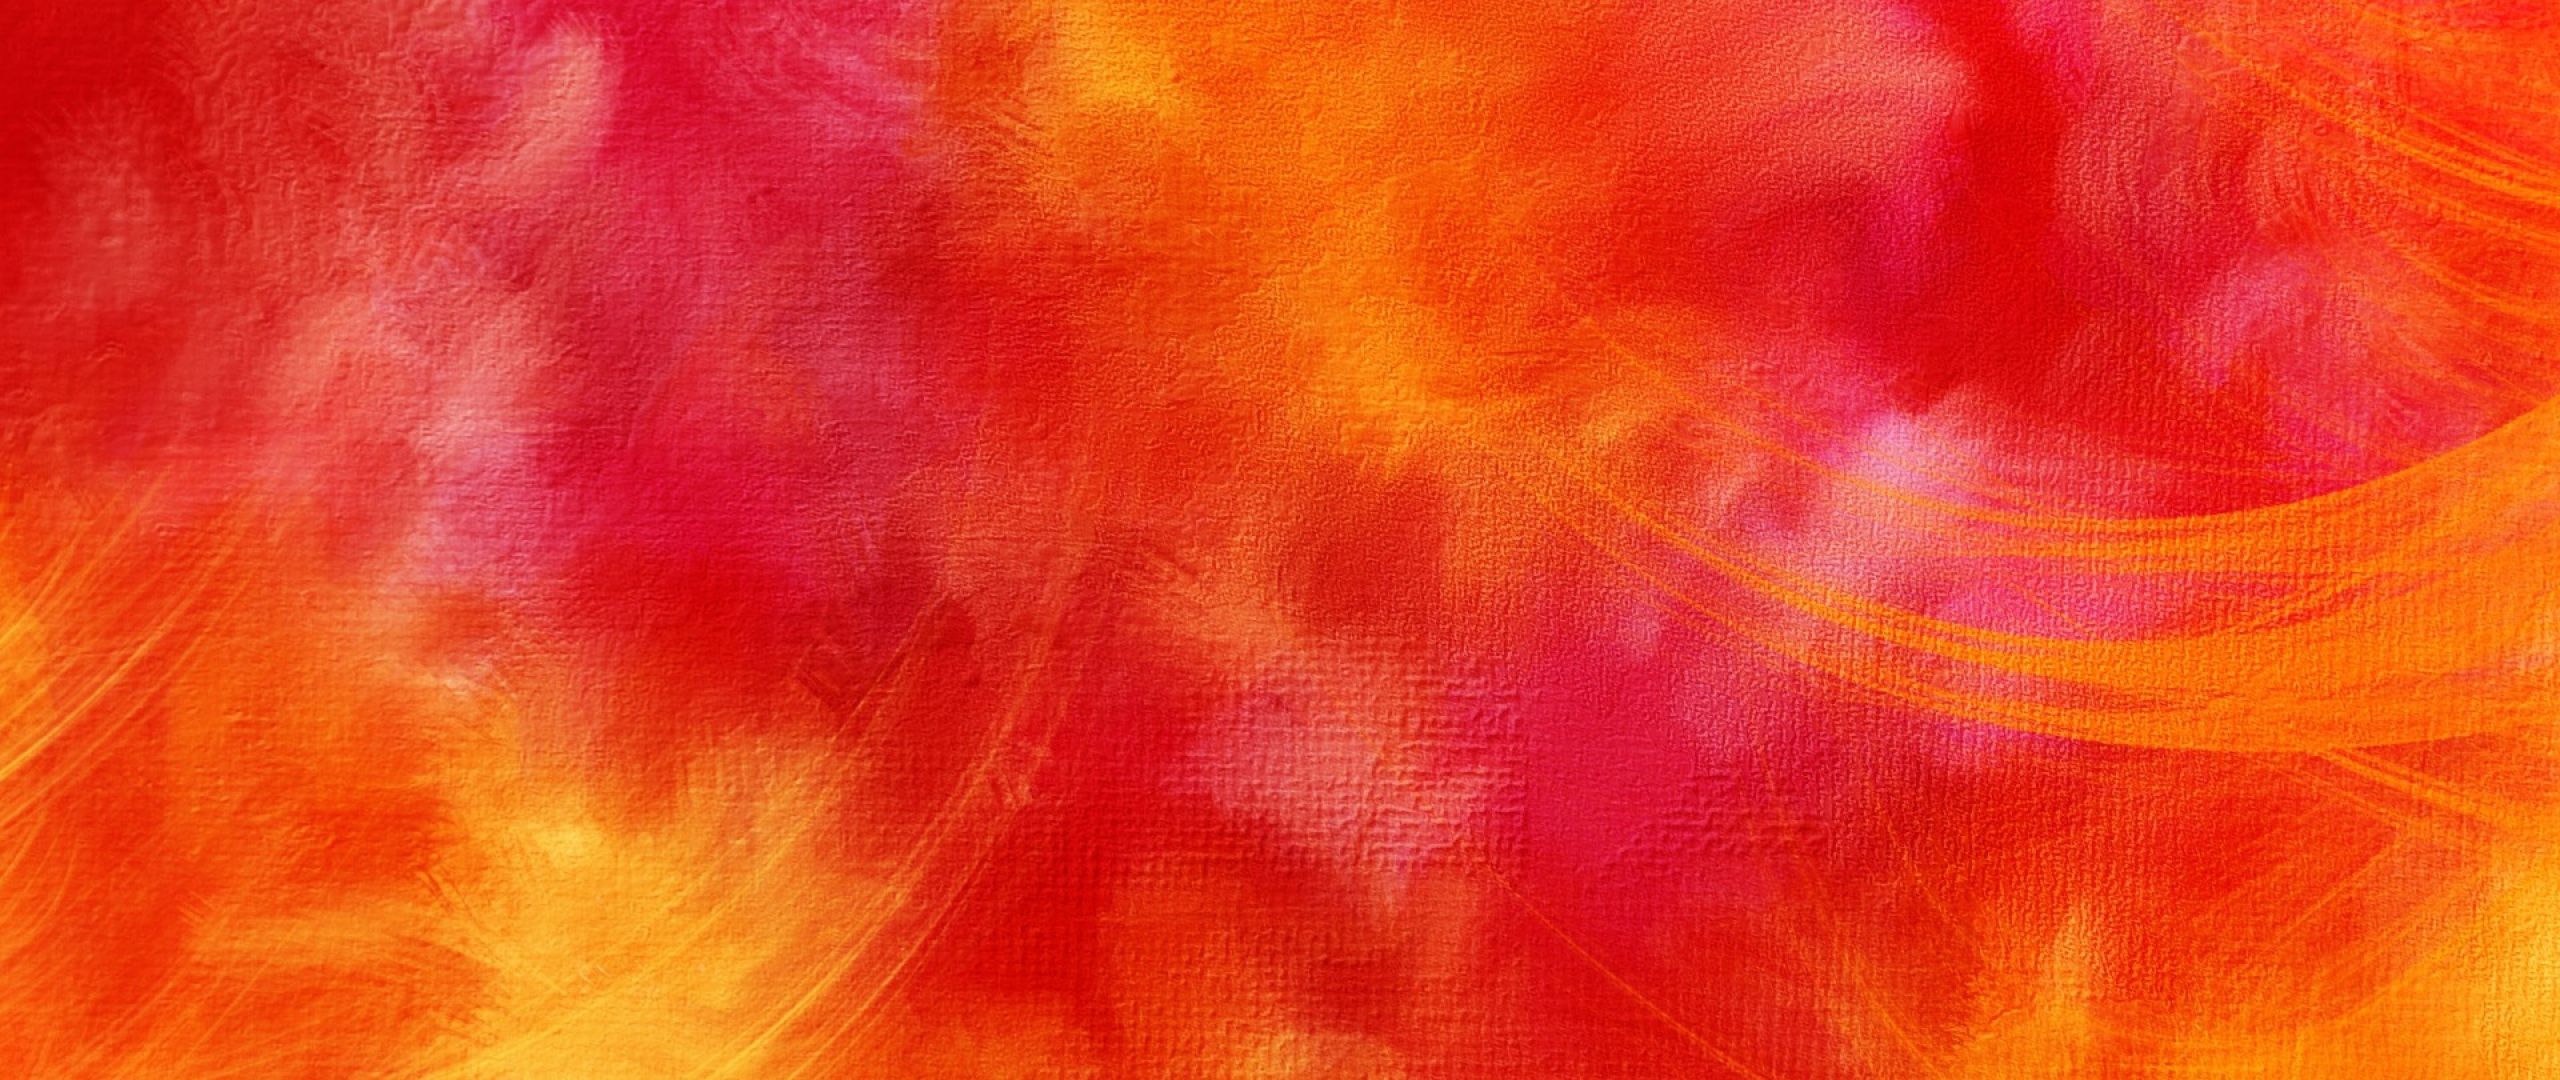 Download Wallpaper 2560x1080 Colorful, Bright, Orange, Red ...